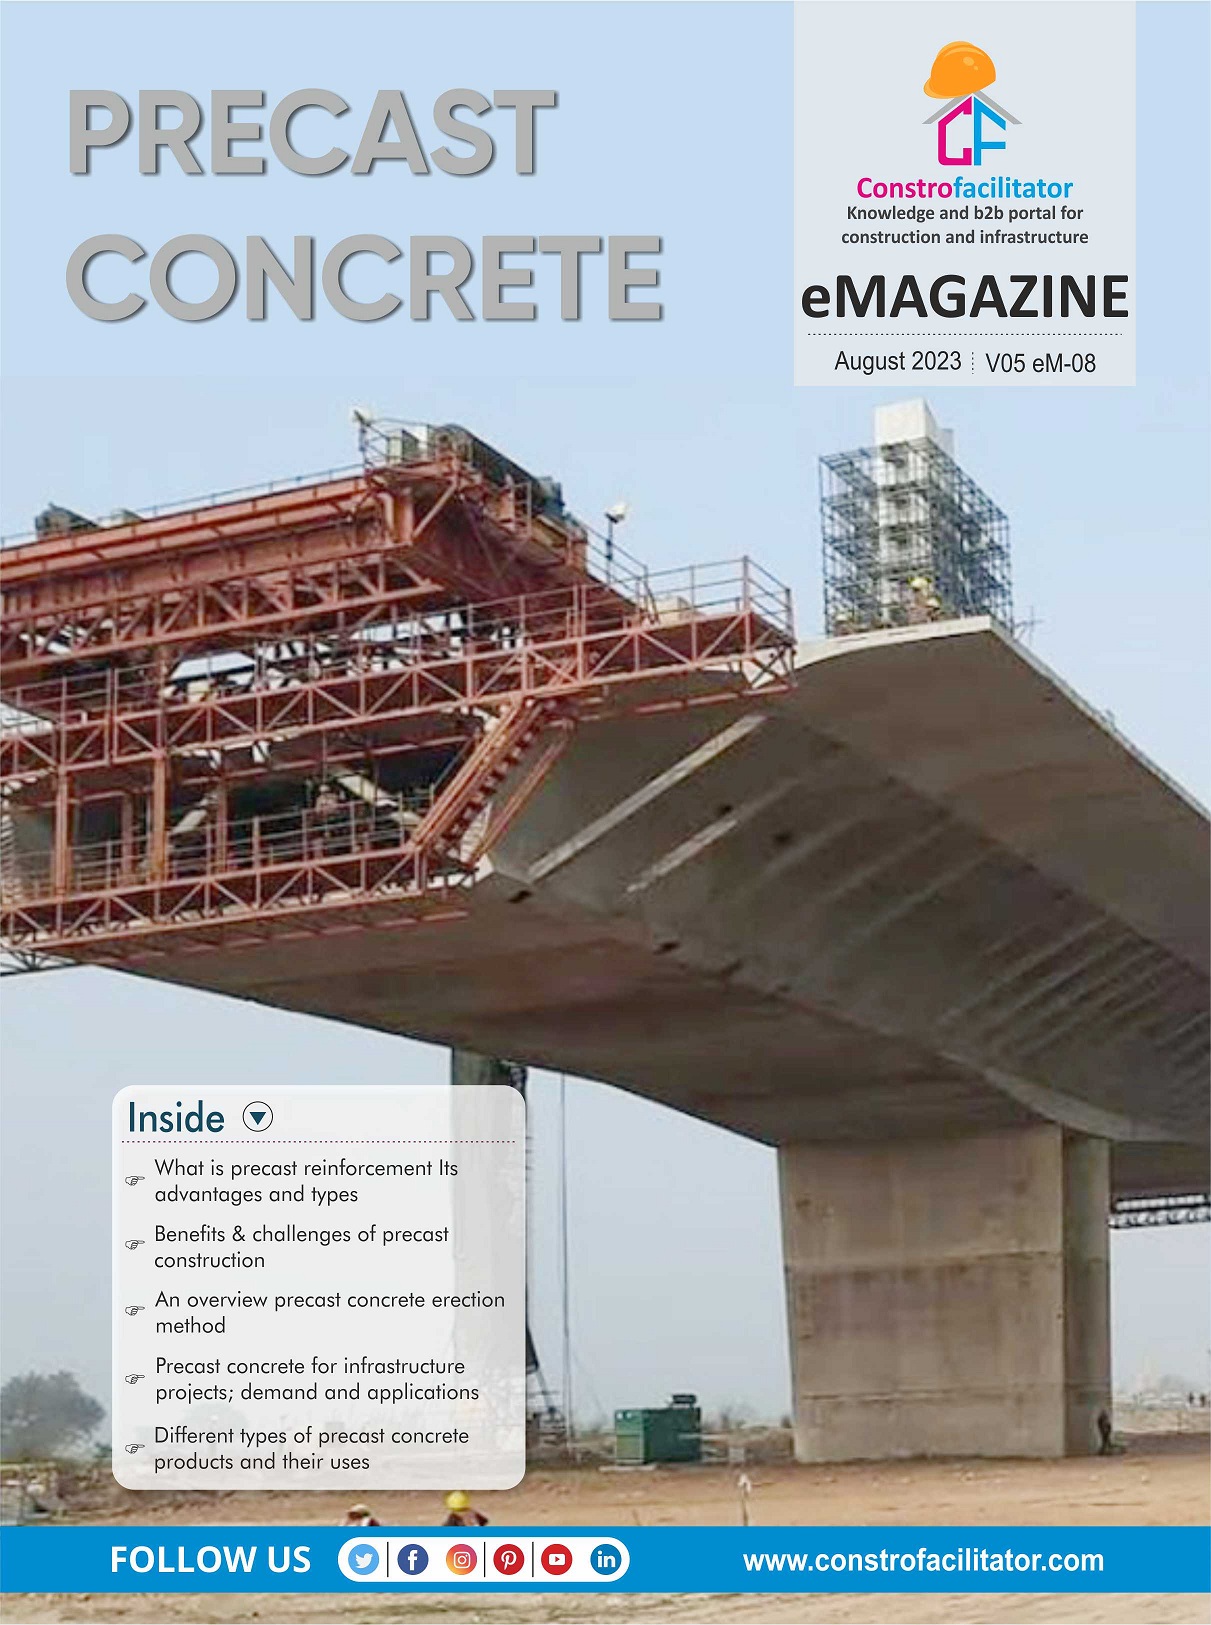 e-Magazine on Precast Concrete